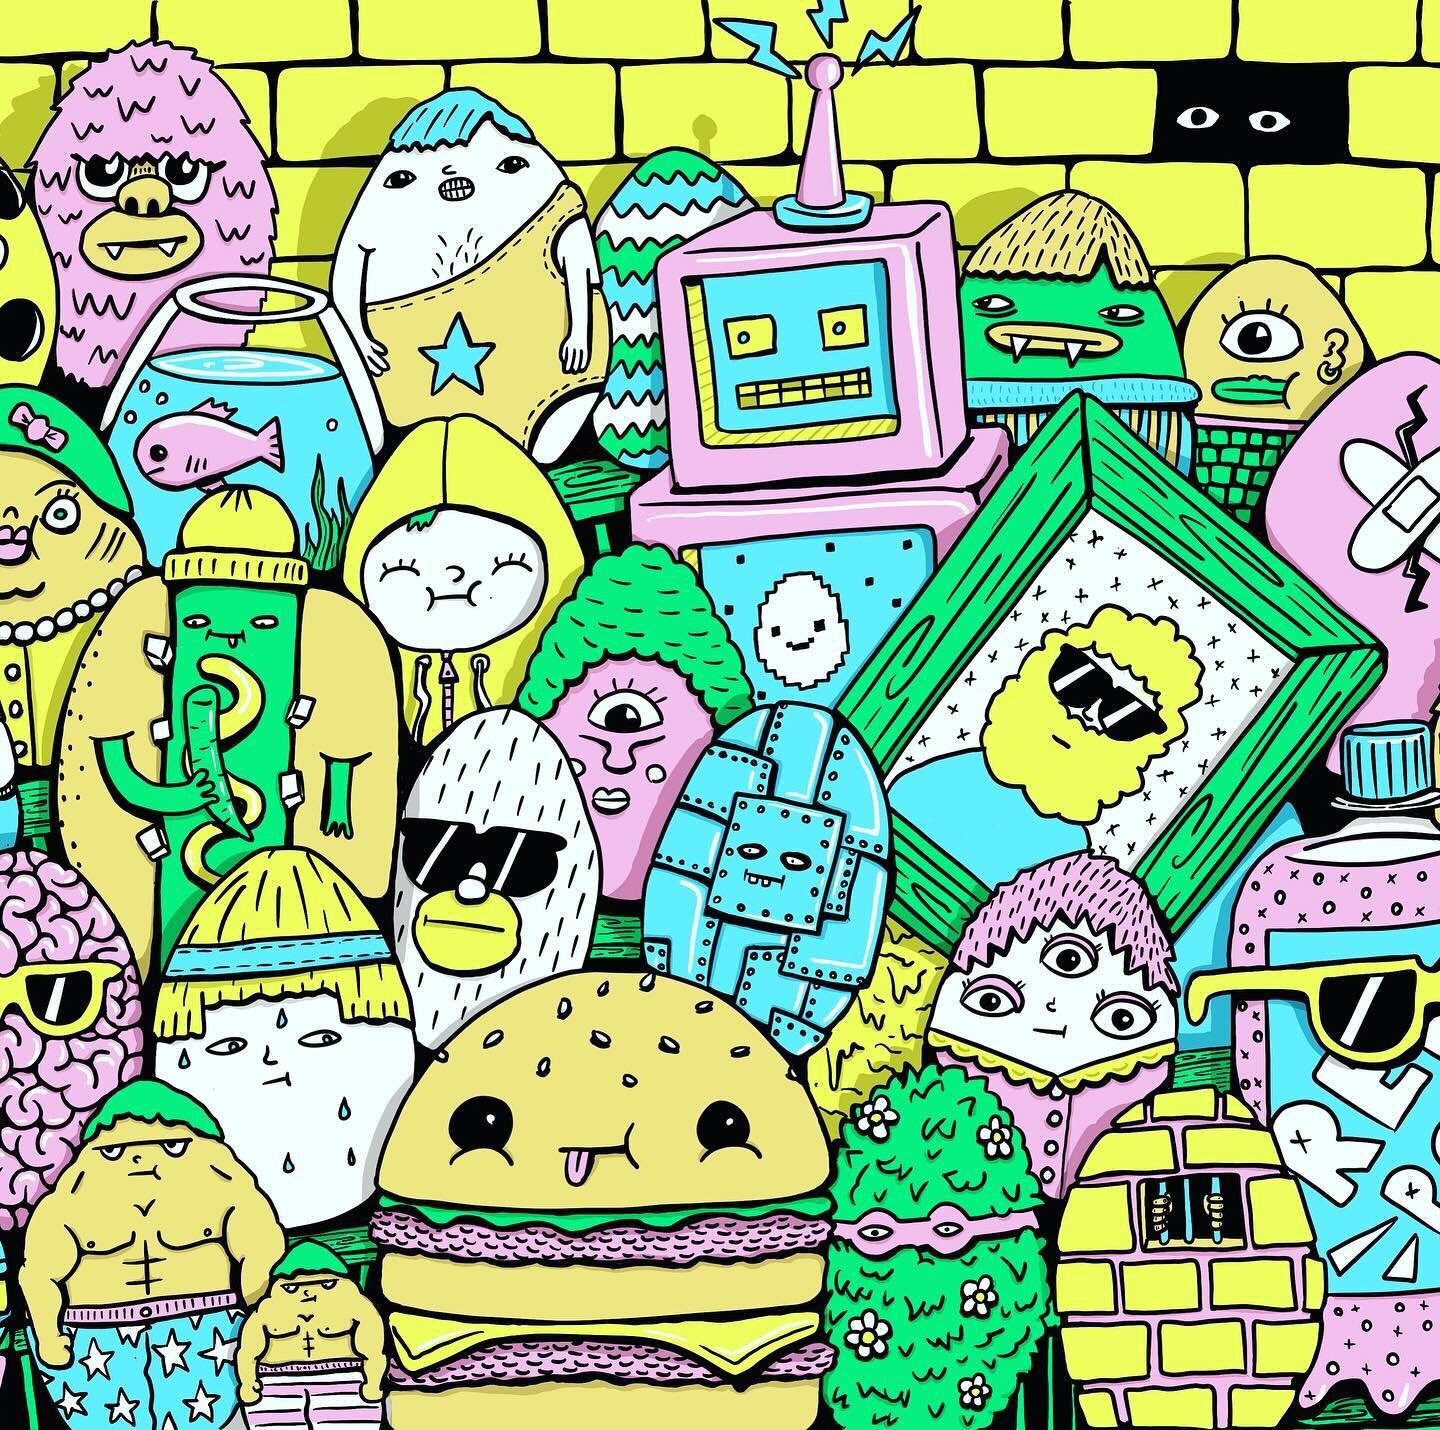 Eggs and friends #eggprize #illustration #eggs #design #characters #robot #hotdog #burger #buff #yellowbricks #fish #pop #art #artvending #drawing #digitalart #digitalillustration #ipad #procreate